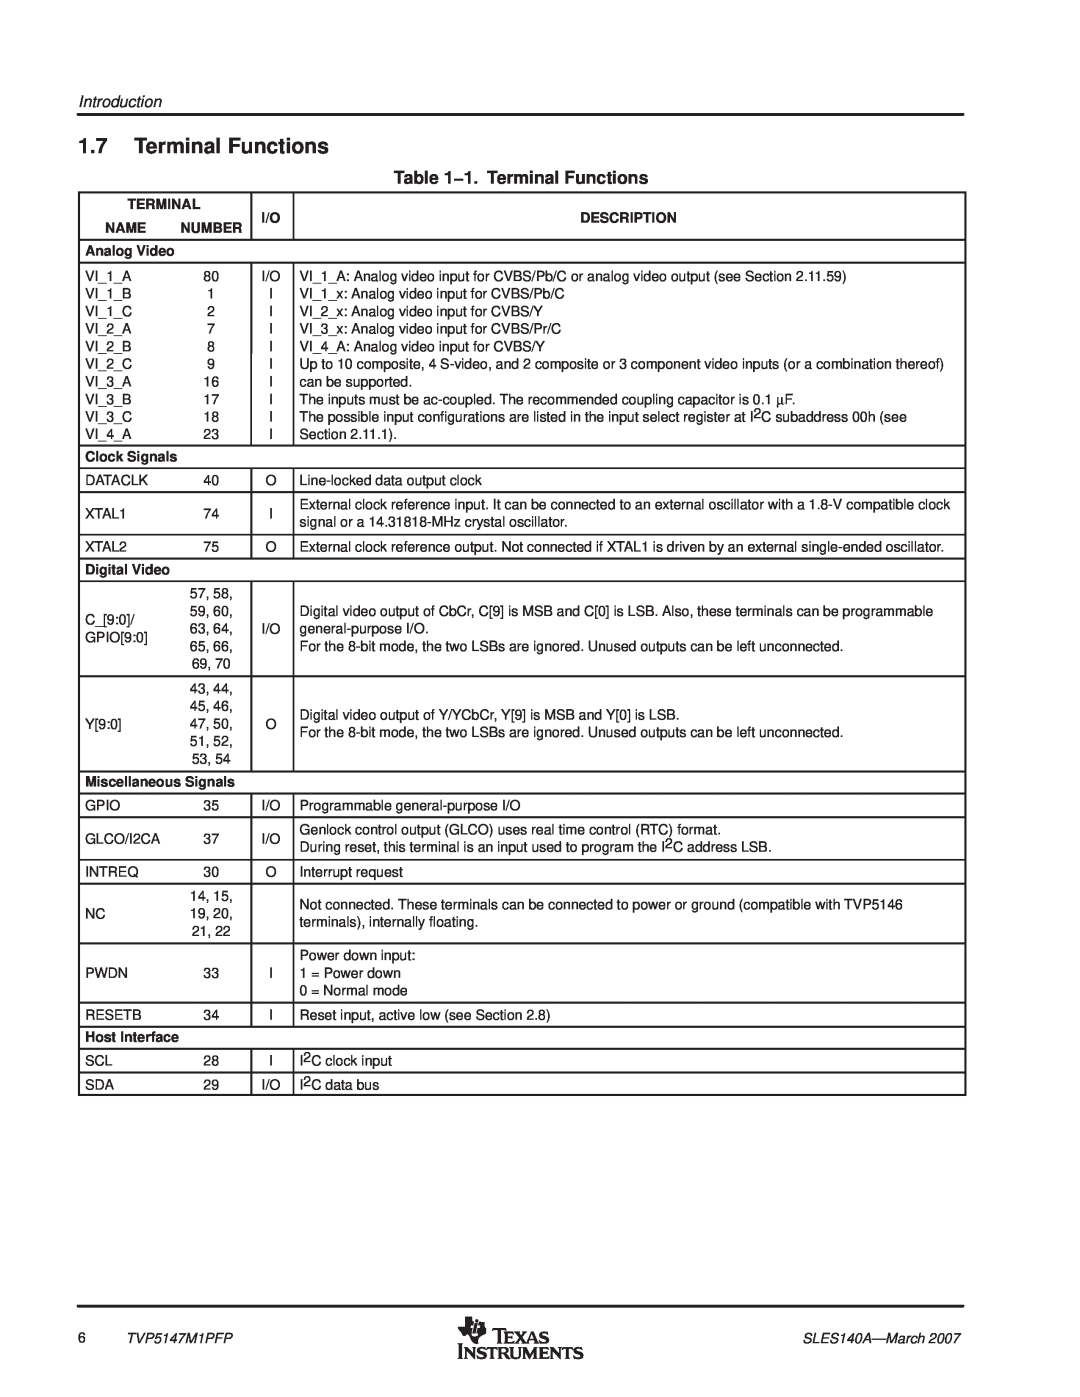 Texas Instruments TVP5147M1PFP manual 1. Terminal Functions 